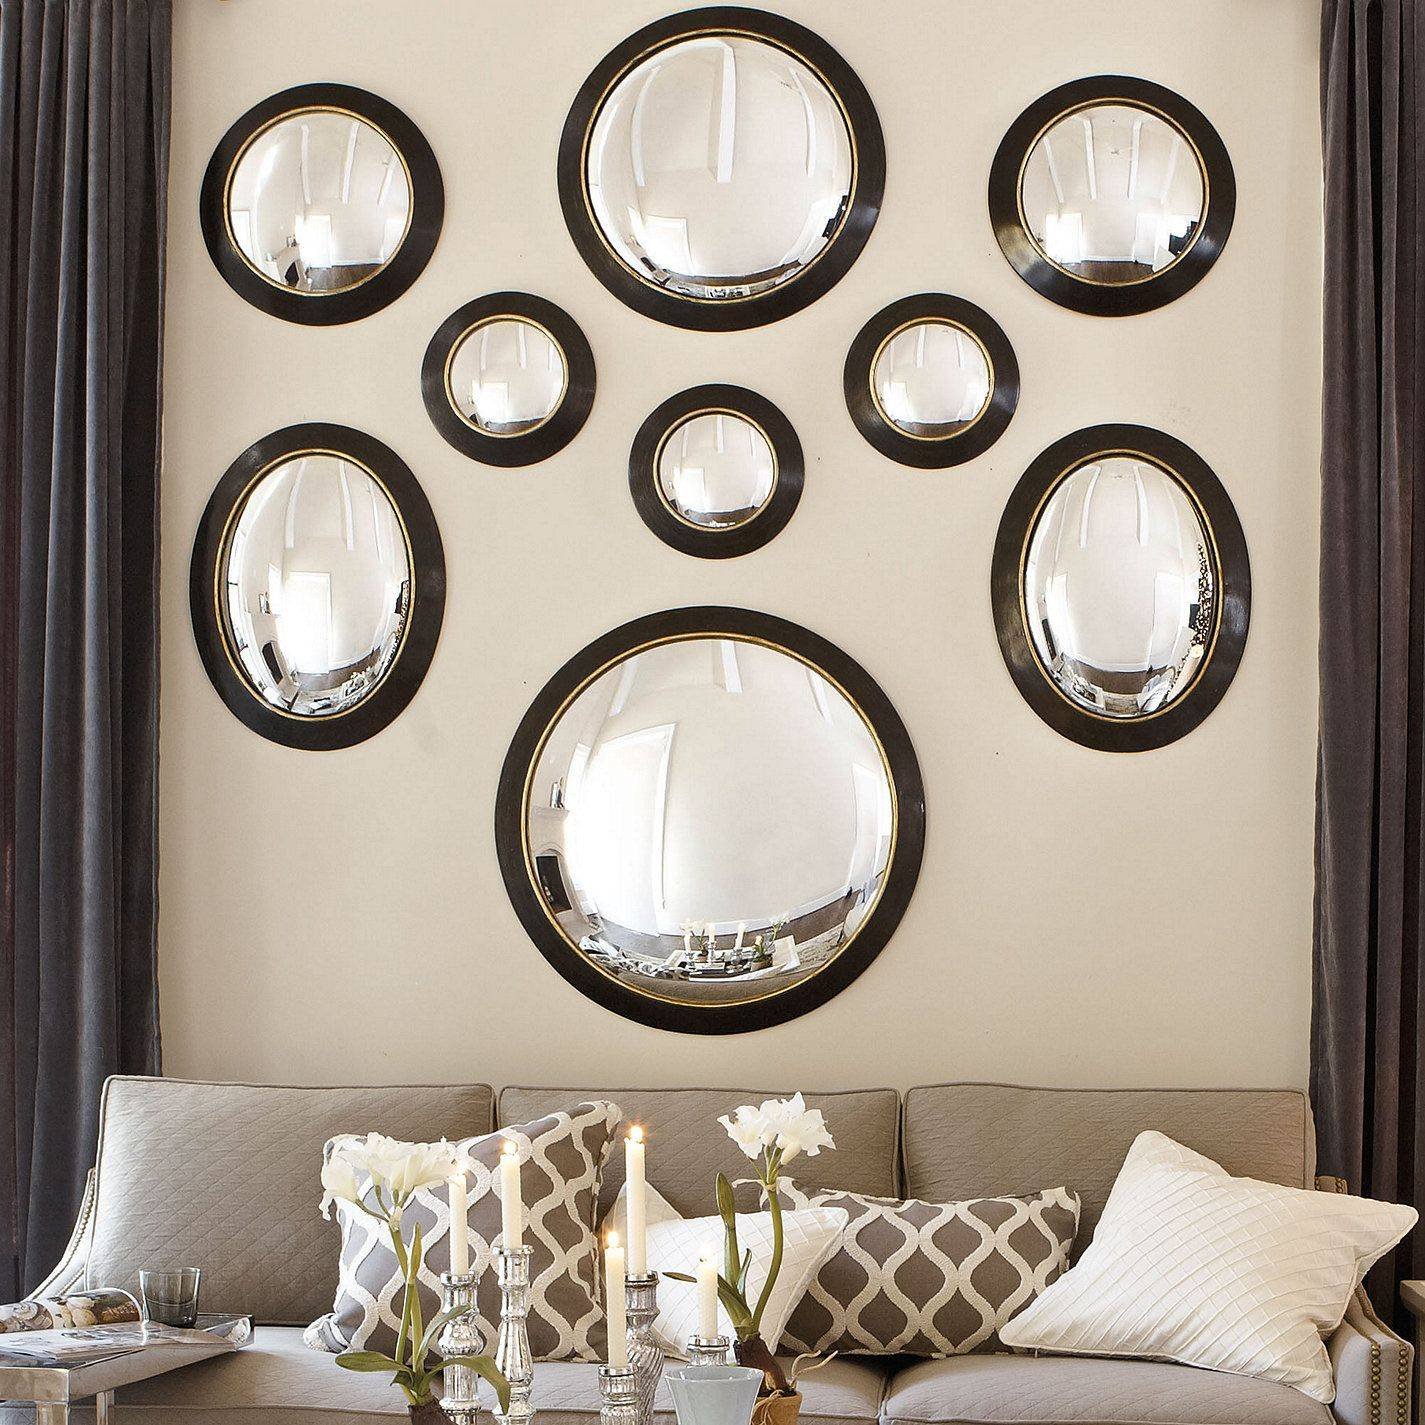 Купить комплект зеркал. Круглые зеркала на стену. Зеркало круглое декоративное. Круглое зеркало в интерьере. Декор стены зеркалами.